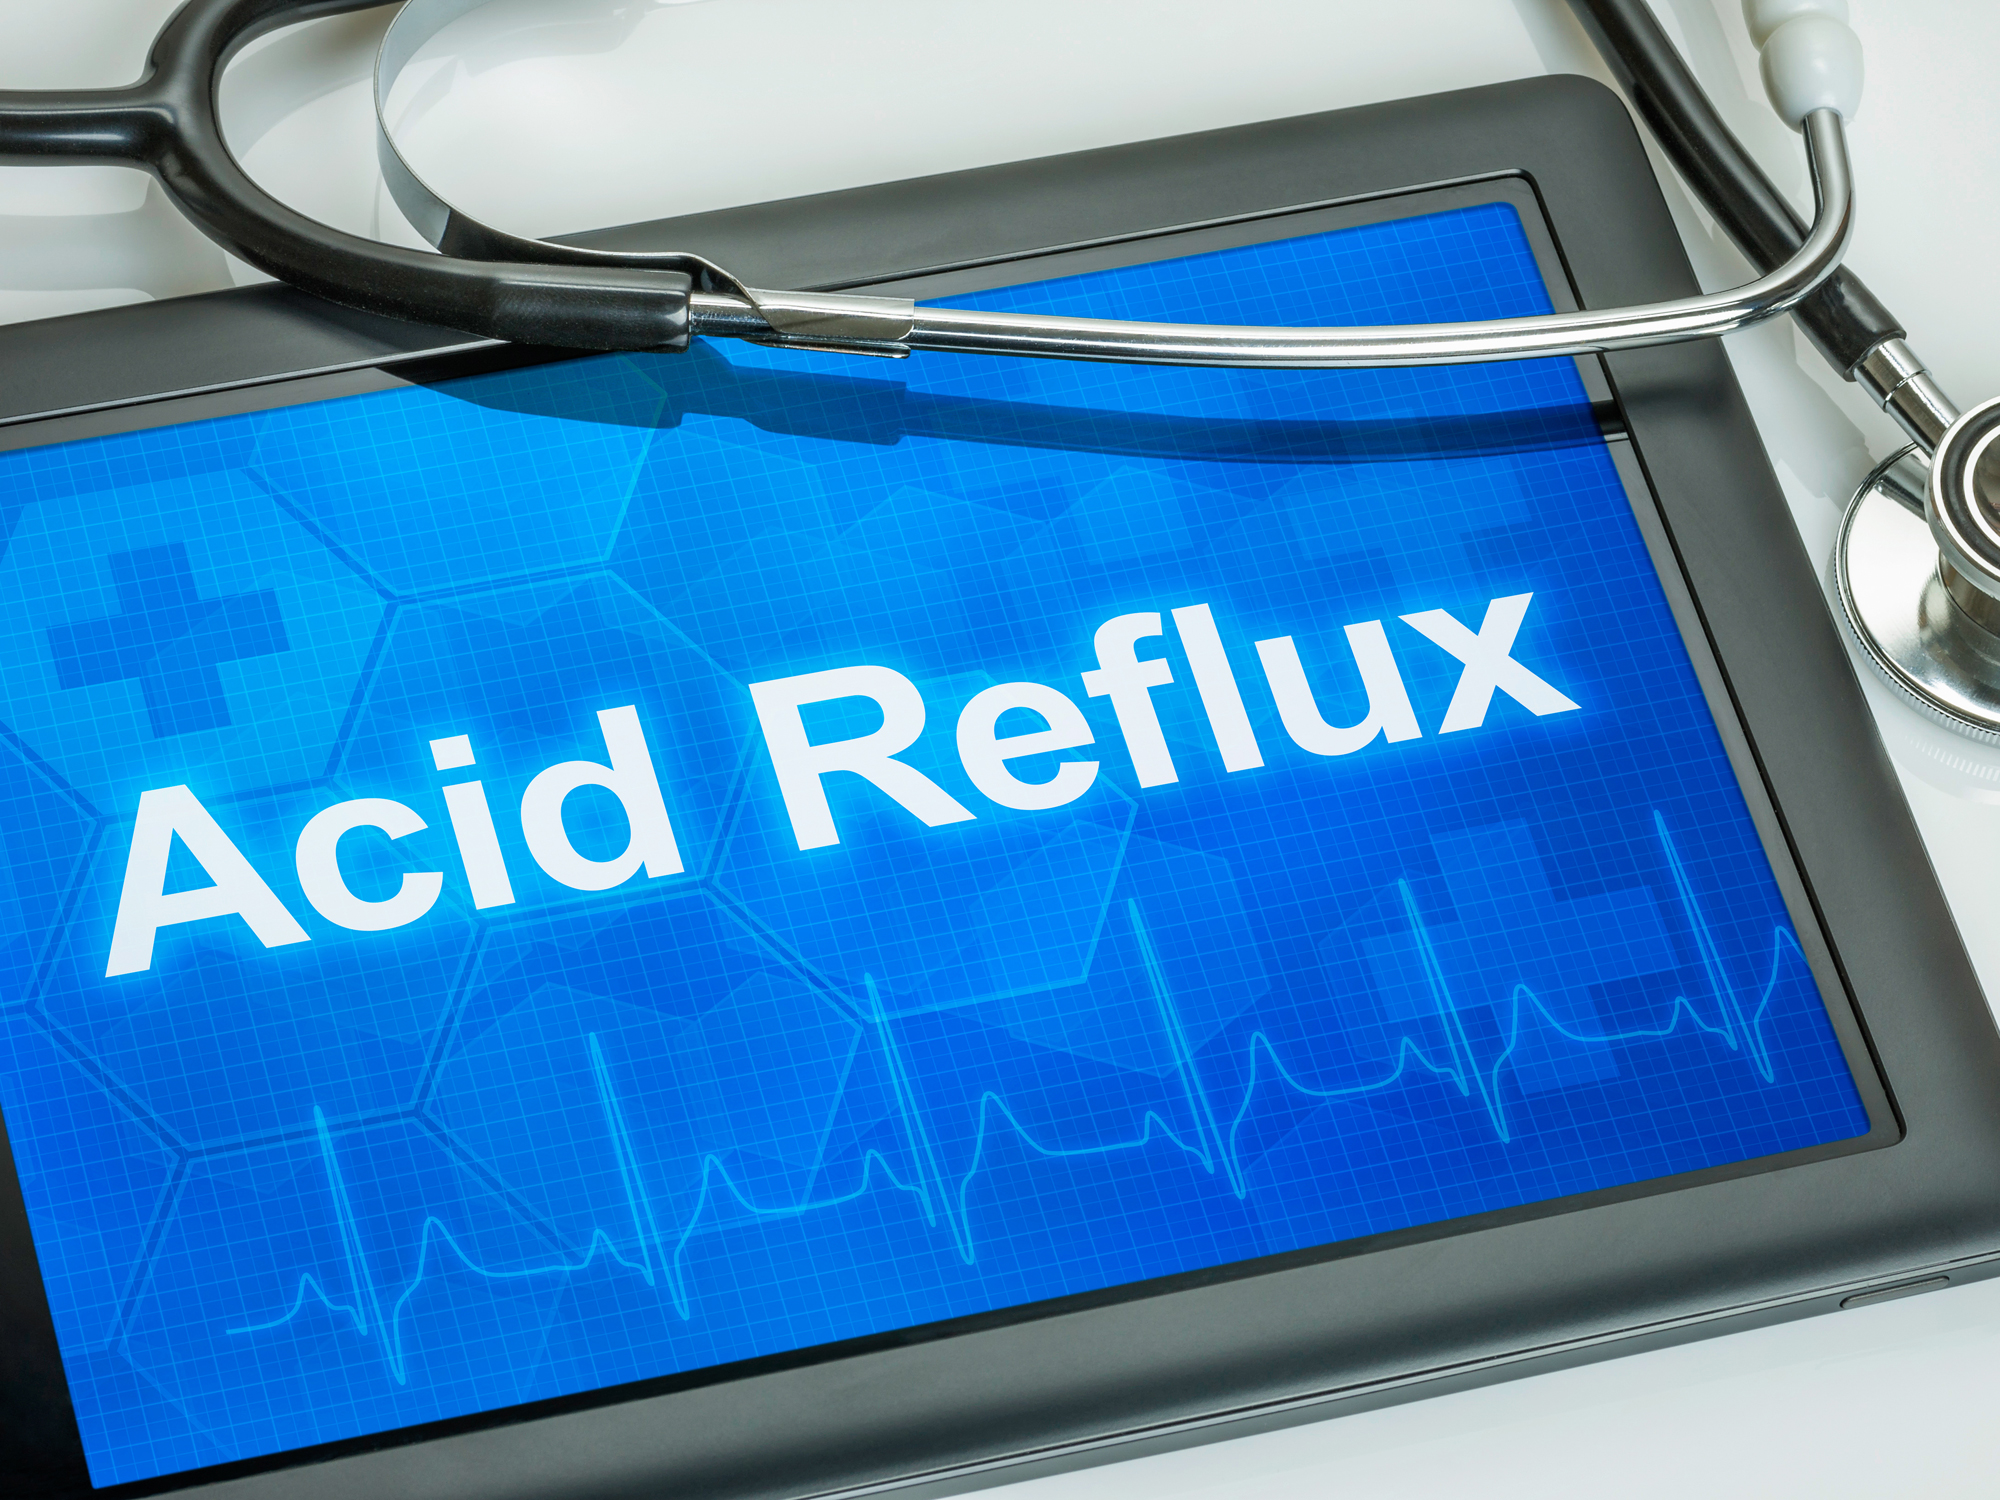 4 reflux remedies that won’t give you a stroke